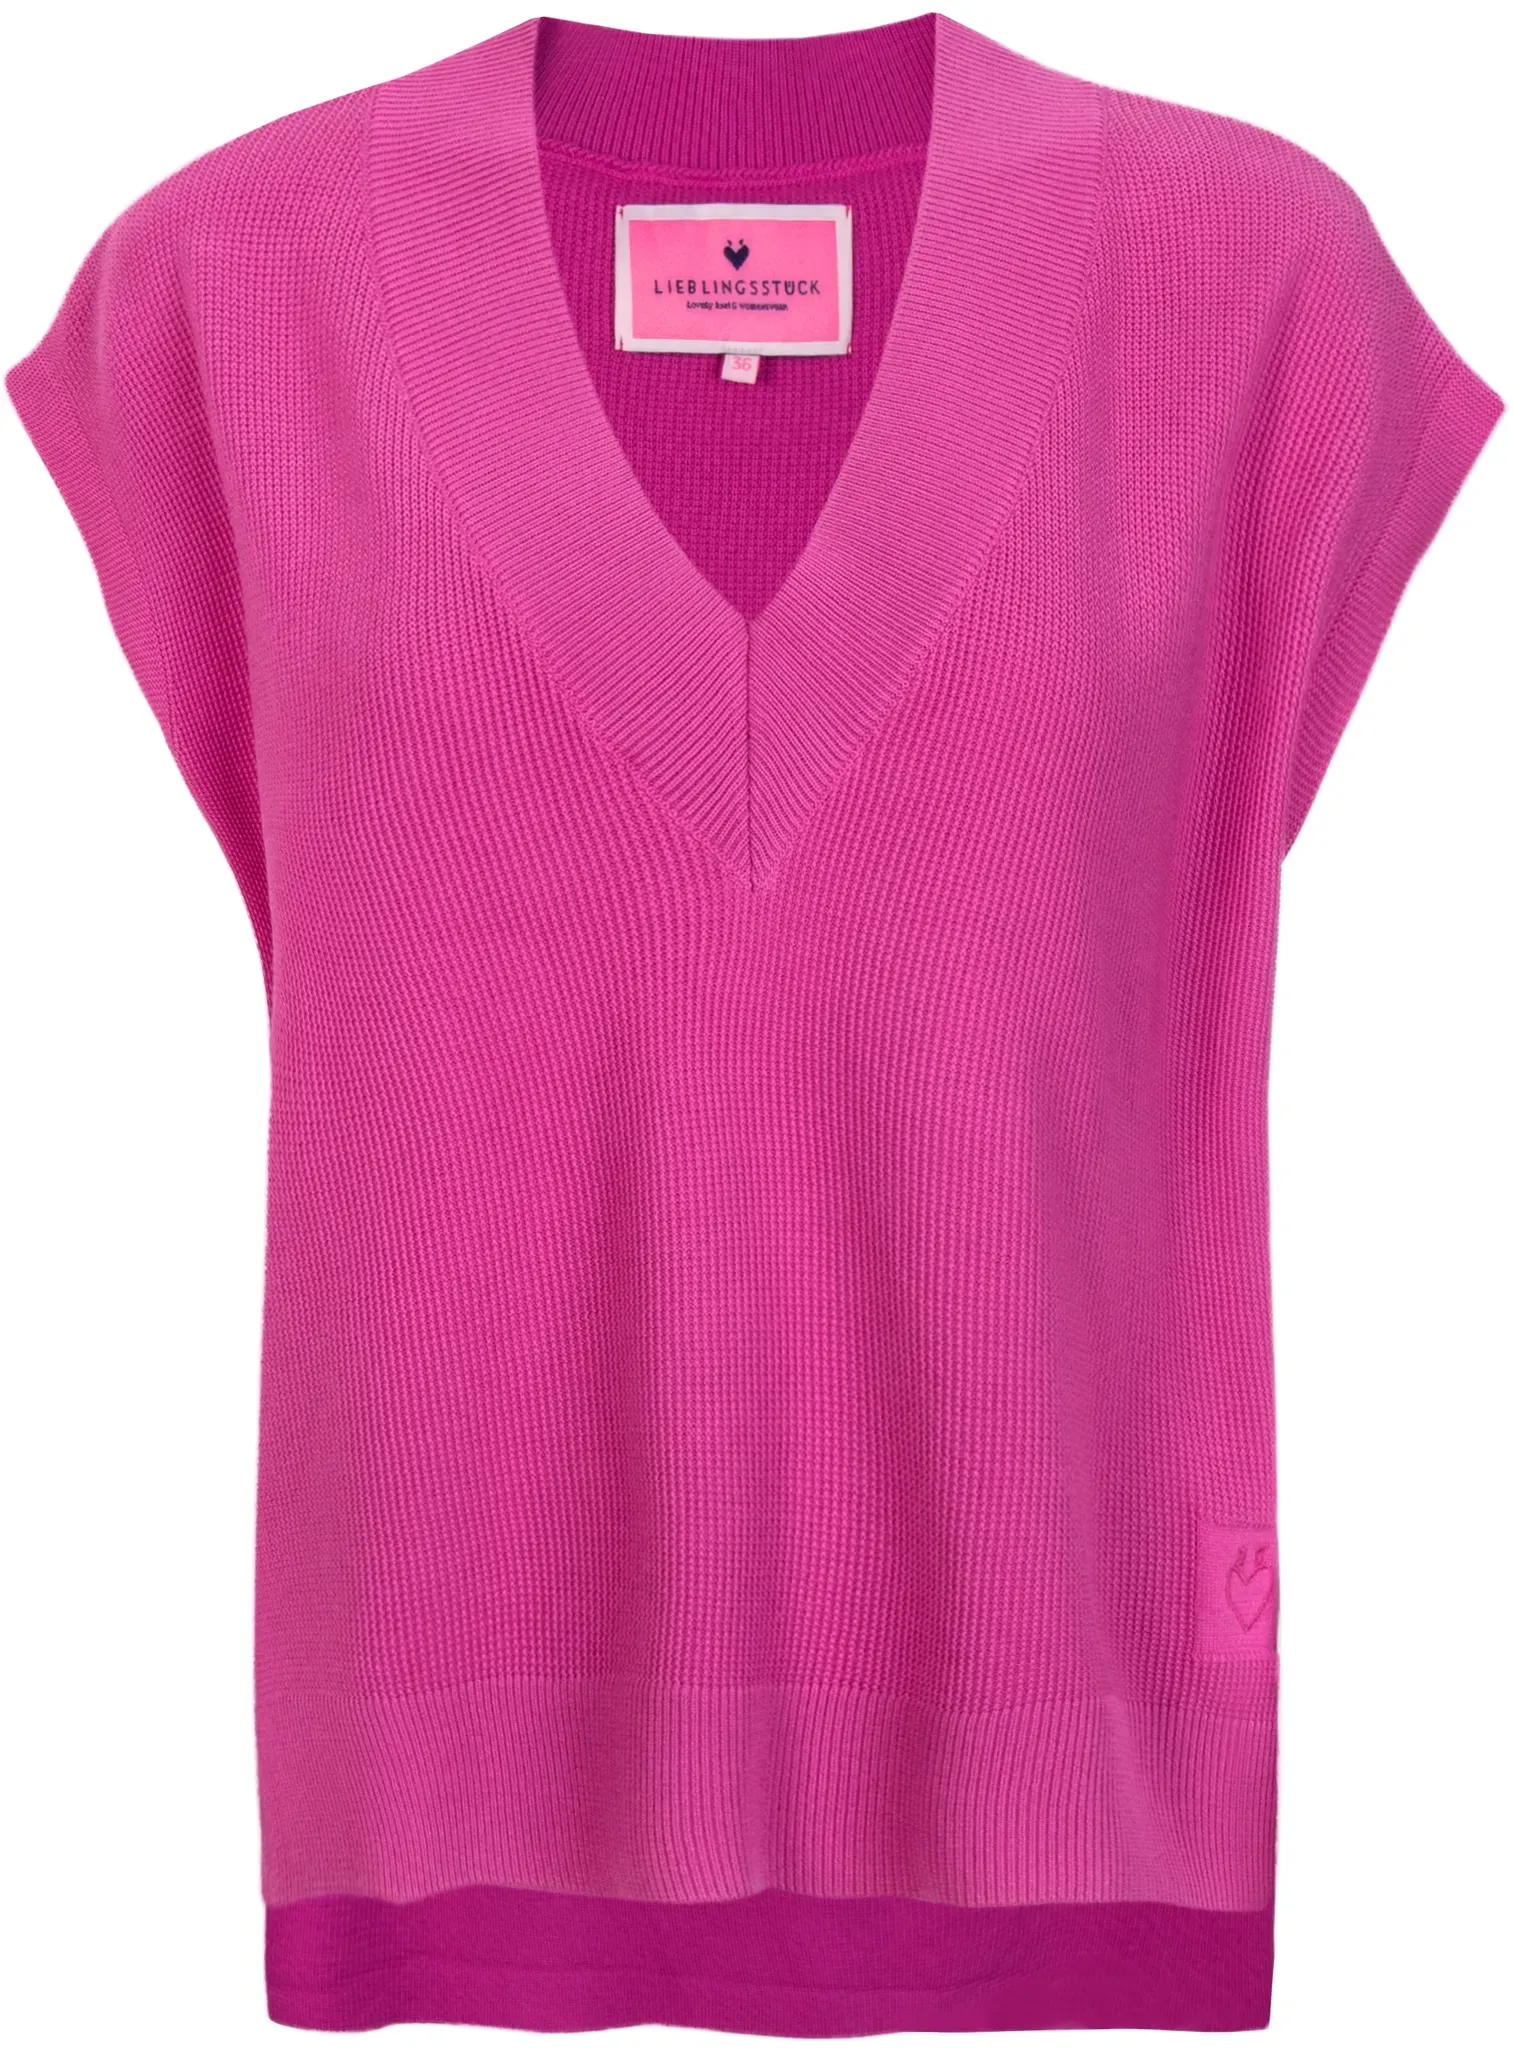 Pullunder LIEBLINGSSTÜCK "SinaEP" Gr. 36, pink Damen Pullover Pullunder mit V-Ausschnitt